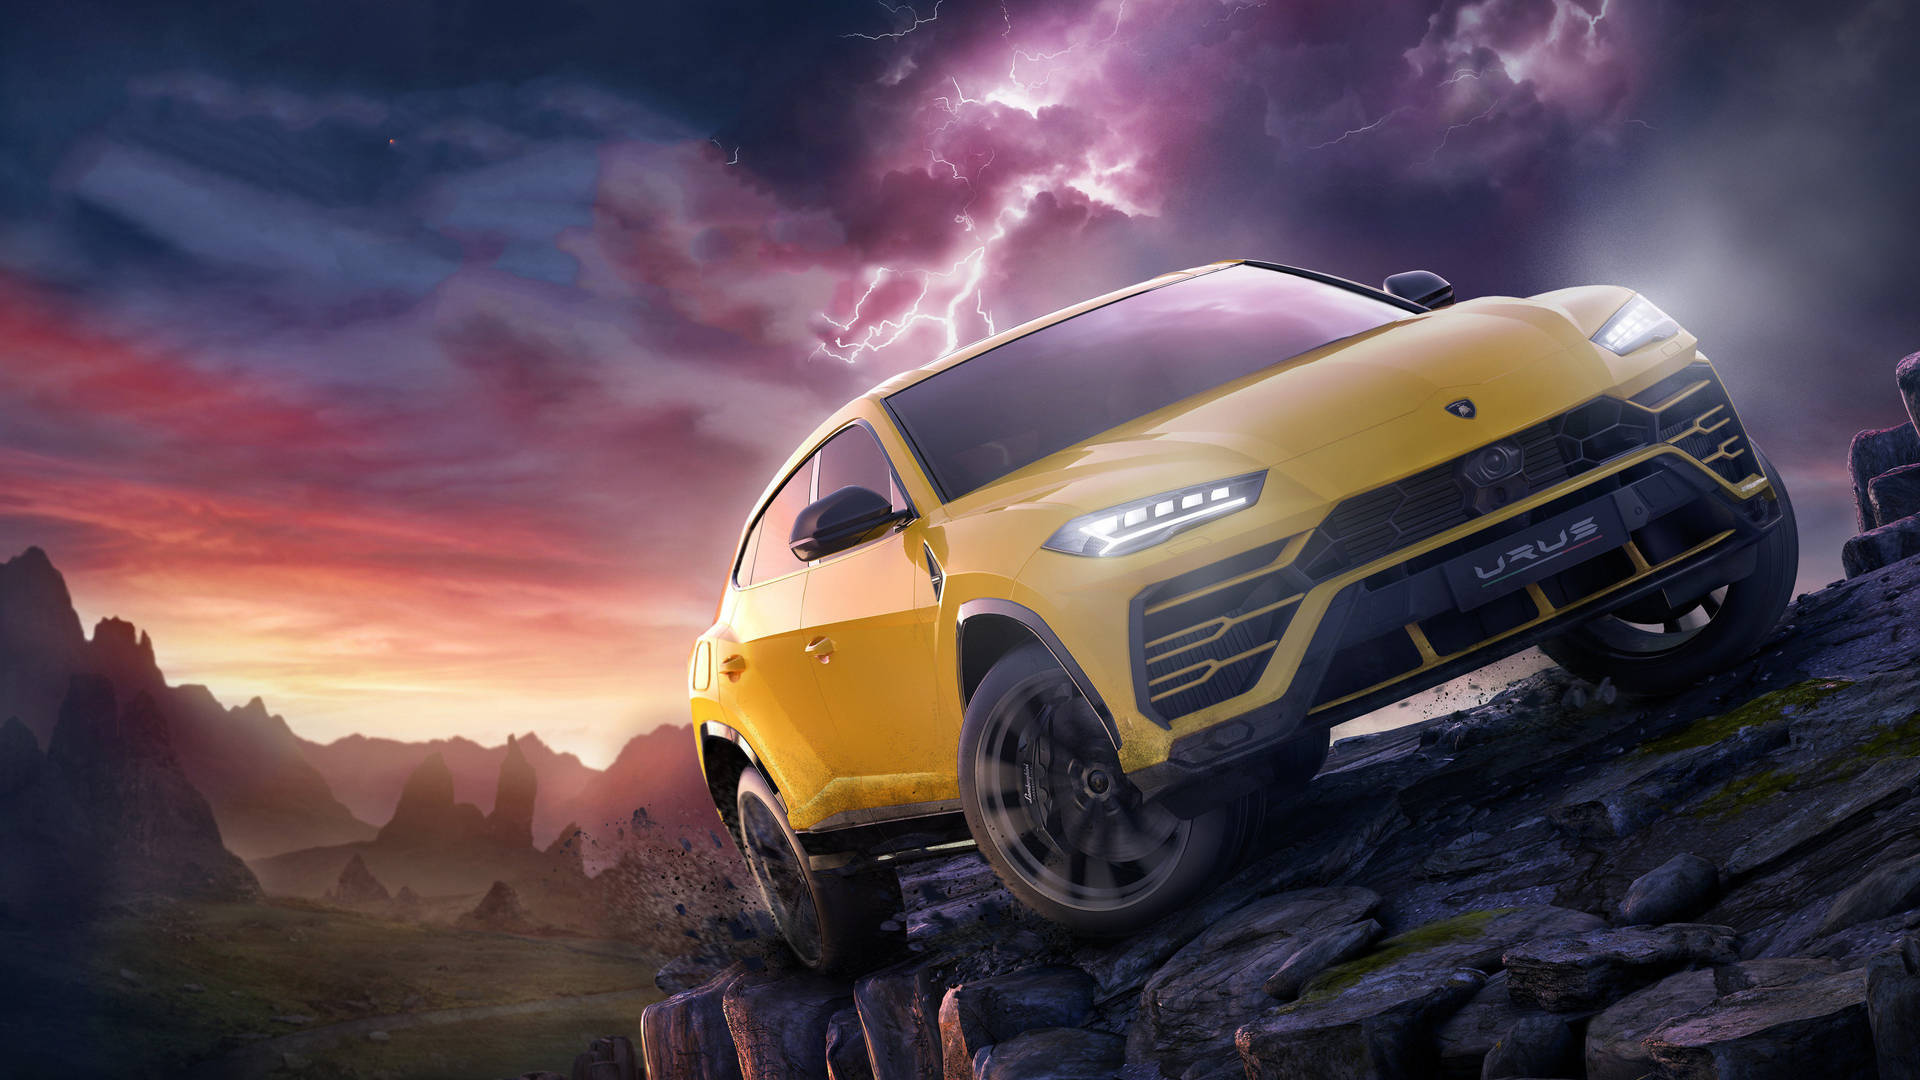 Tilføj et tordenagtigt touch til din skærm med det 4K-højopløselige Forza Horizon 4 Lamborghini Urus-tapet. Wallpaper